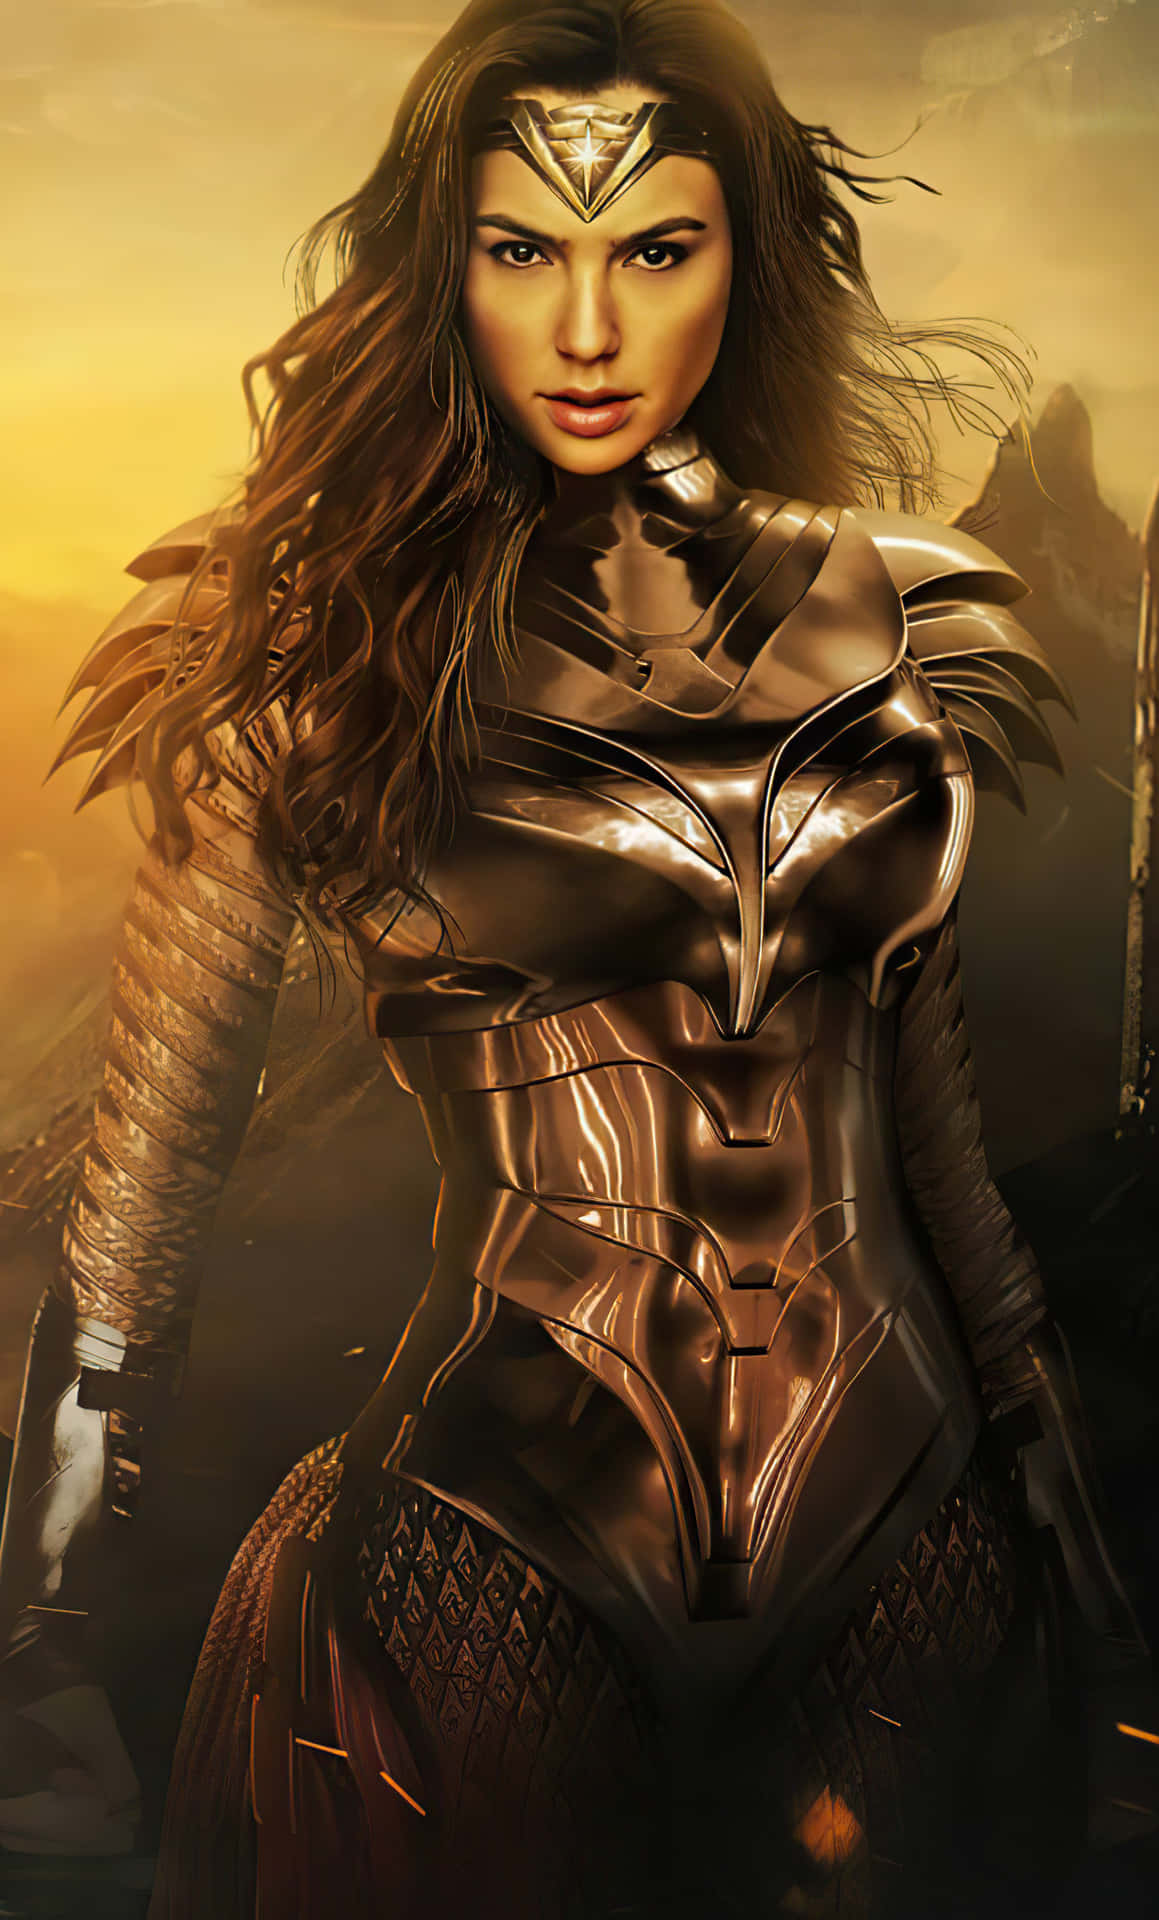 Galgadot Als Diana Prince, Die Amazonen-superheldin Aus Dc's Wonder Woman-franchise.